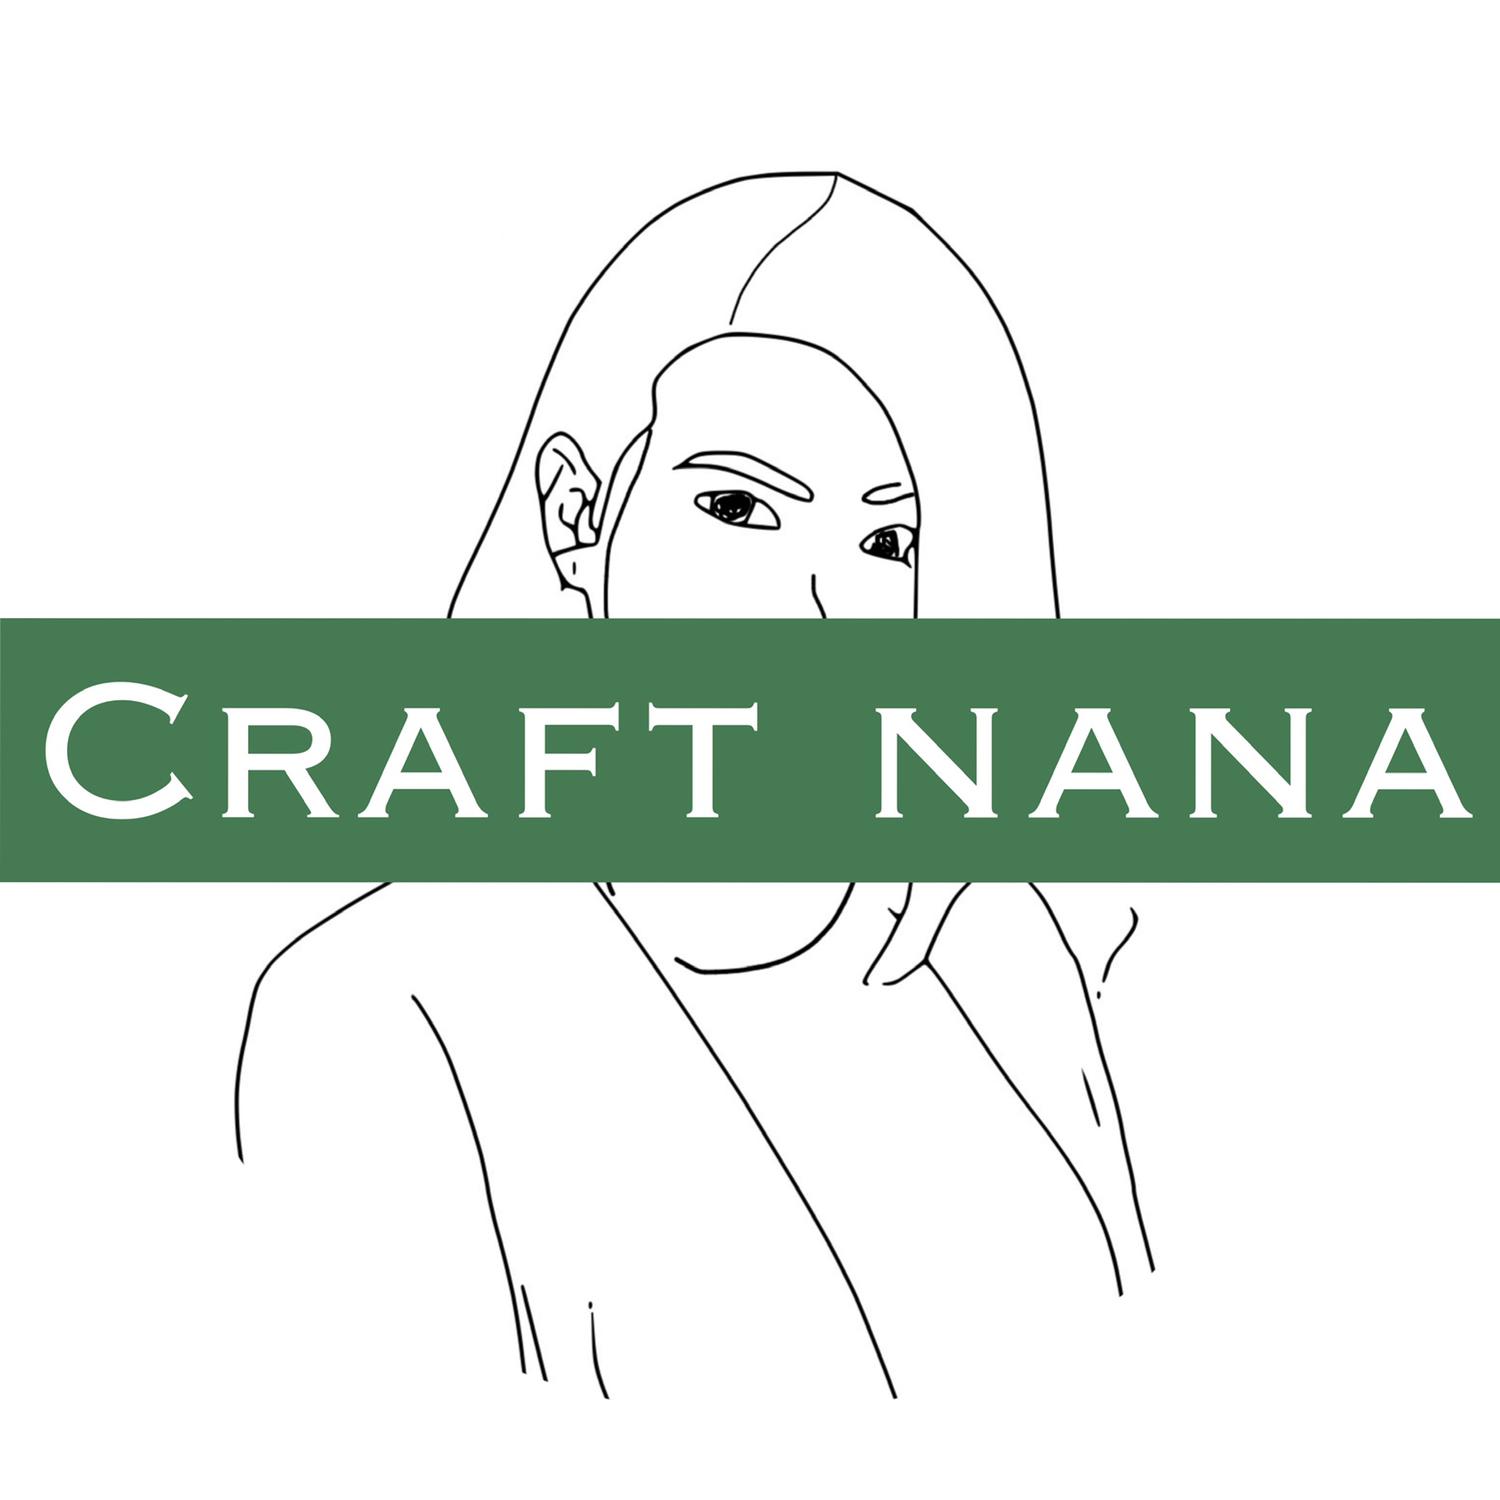 Craft nanaの画像